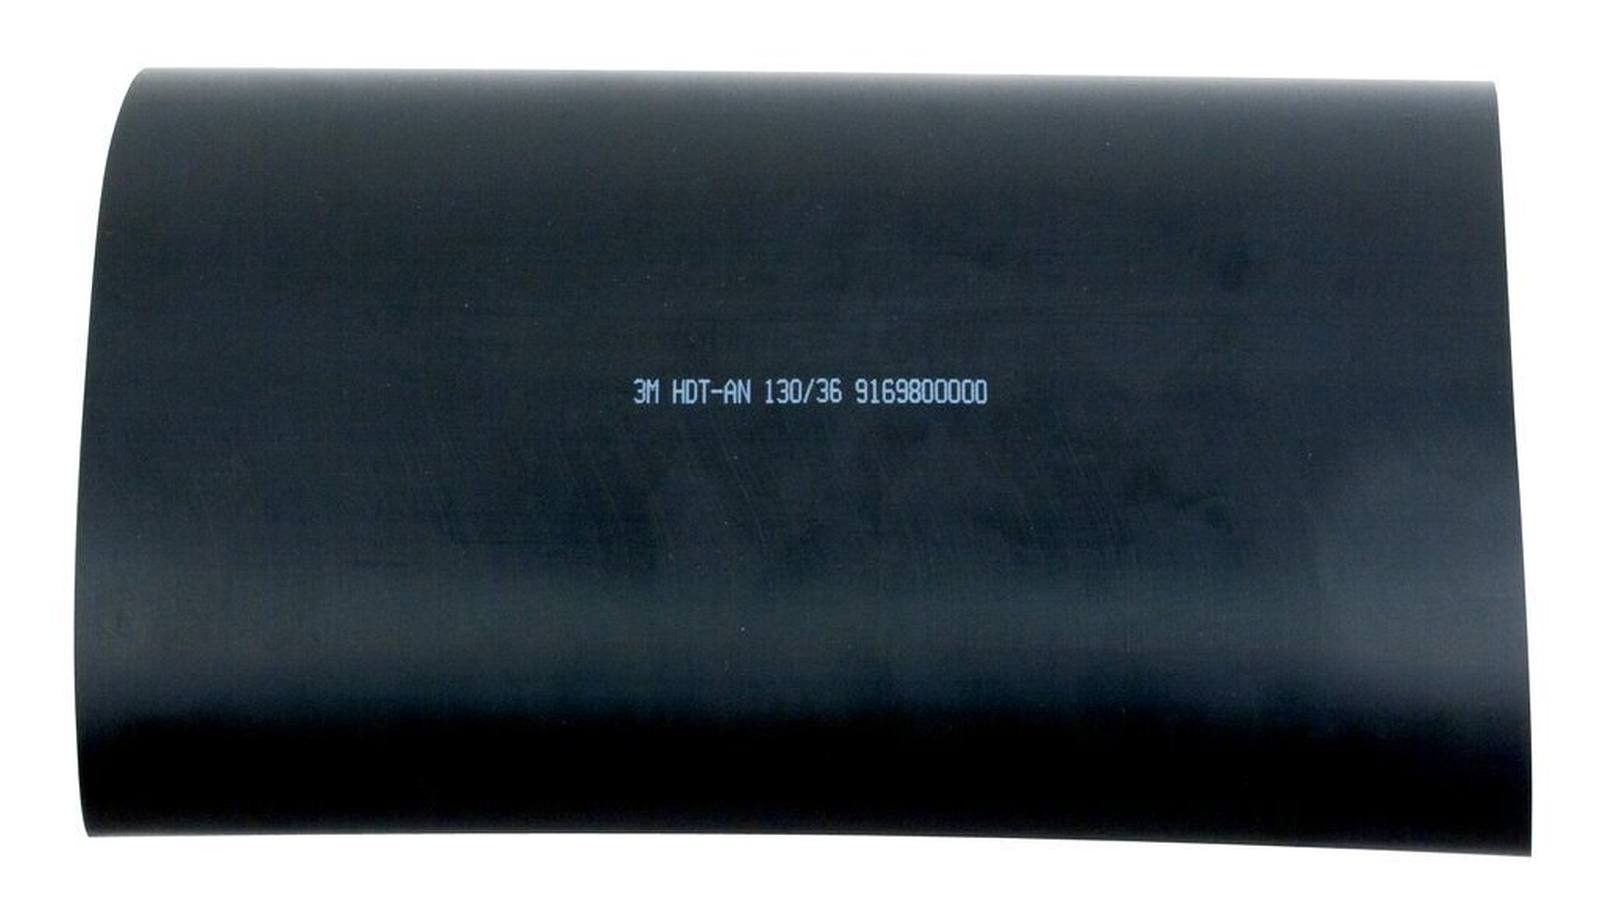 3M HDT-AN Tubo termorretráctil de pared gruesa con adhesivo, negro, 130/36 mm, 1 m